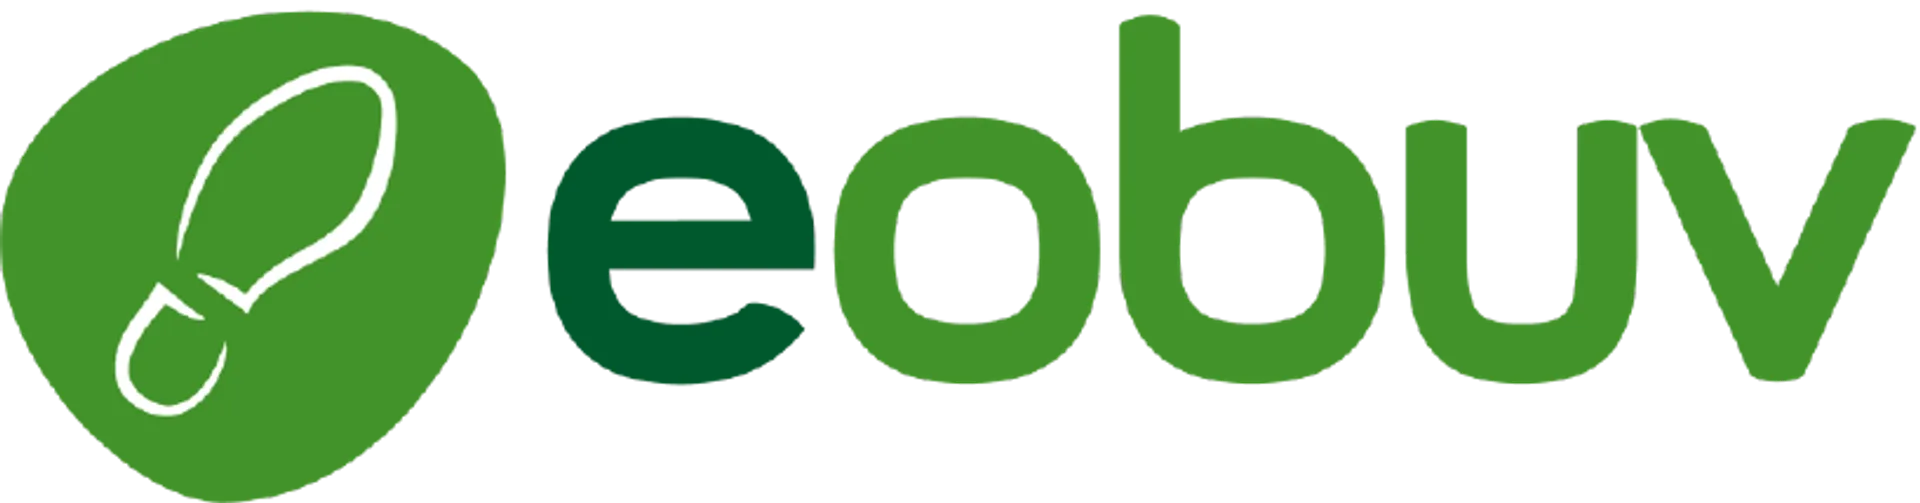 EOBUV.CZ logo of current catalogue